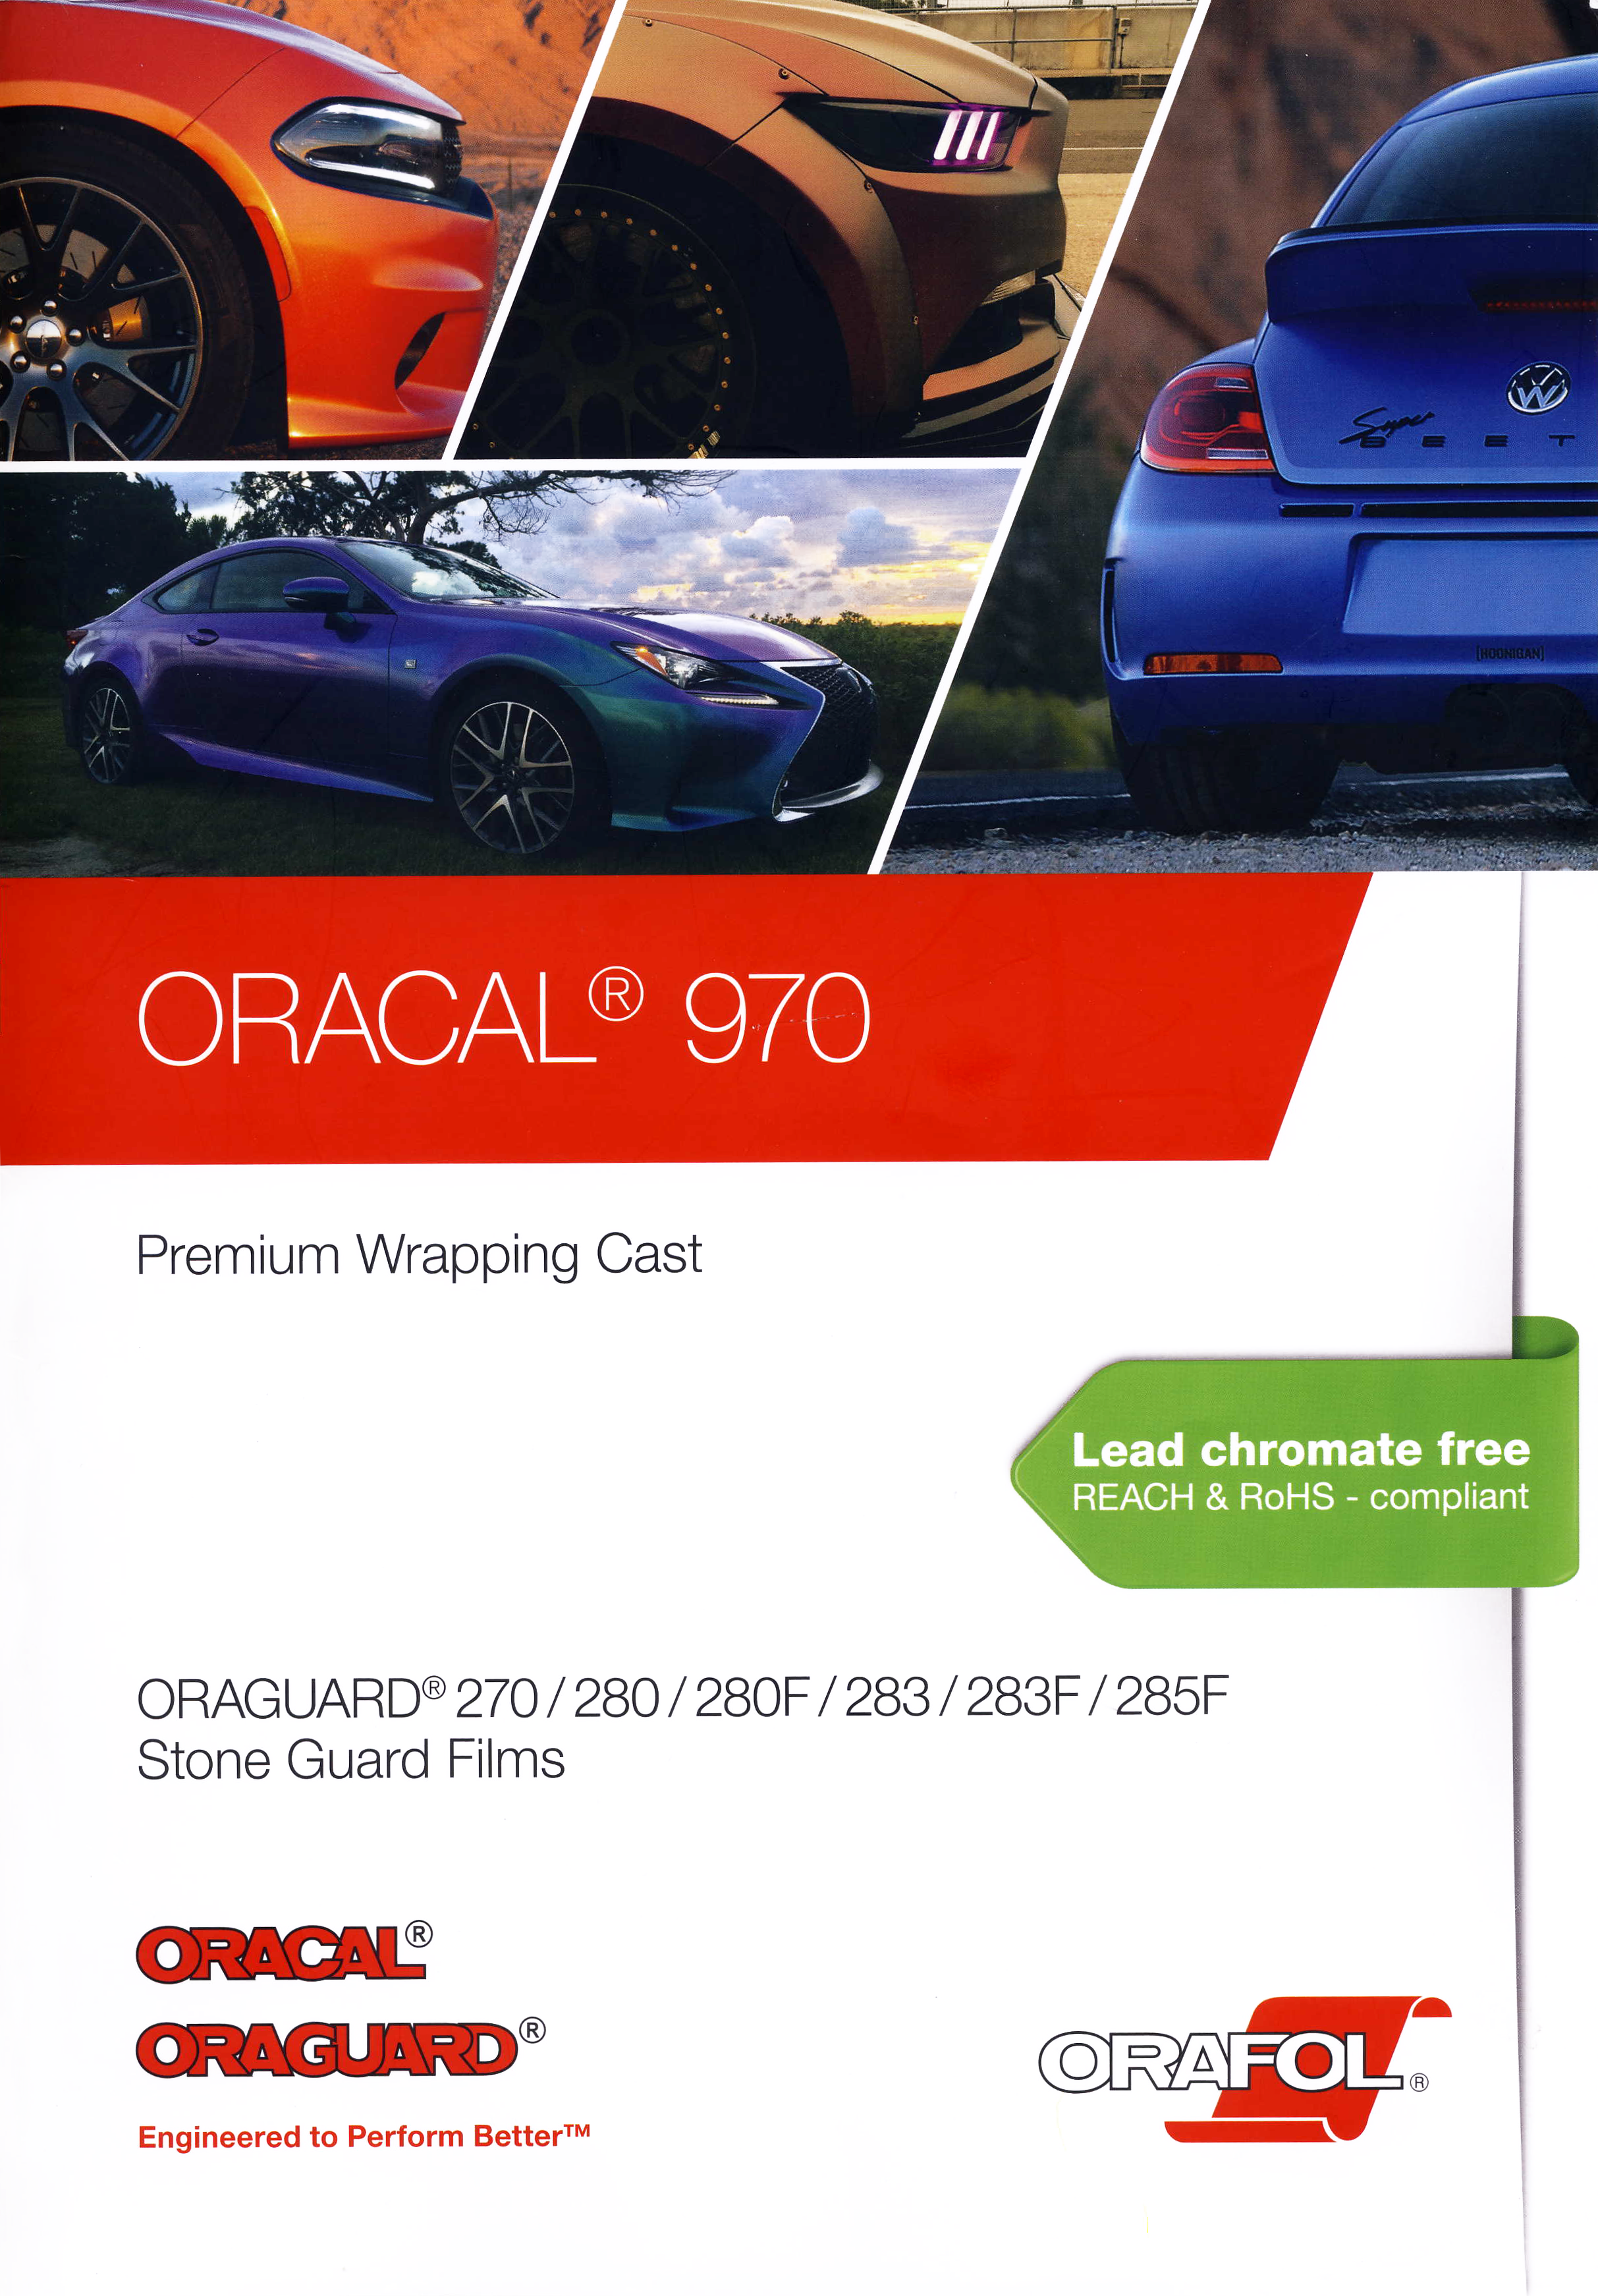 Oracal 970RA Premium Wrapping Cast Rapid Air gloss